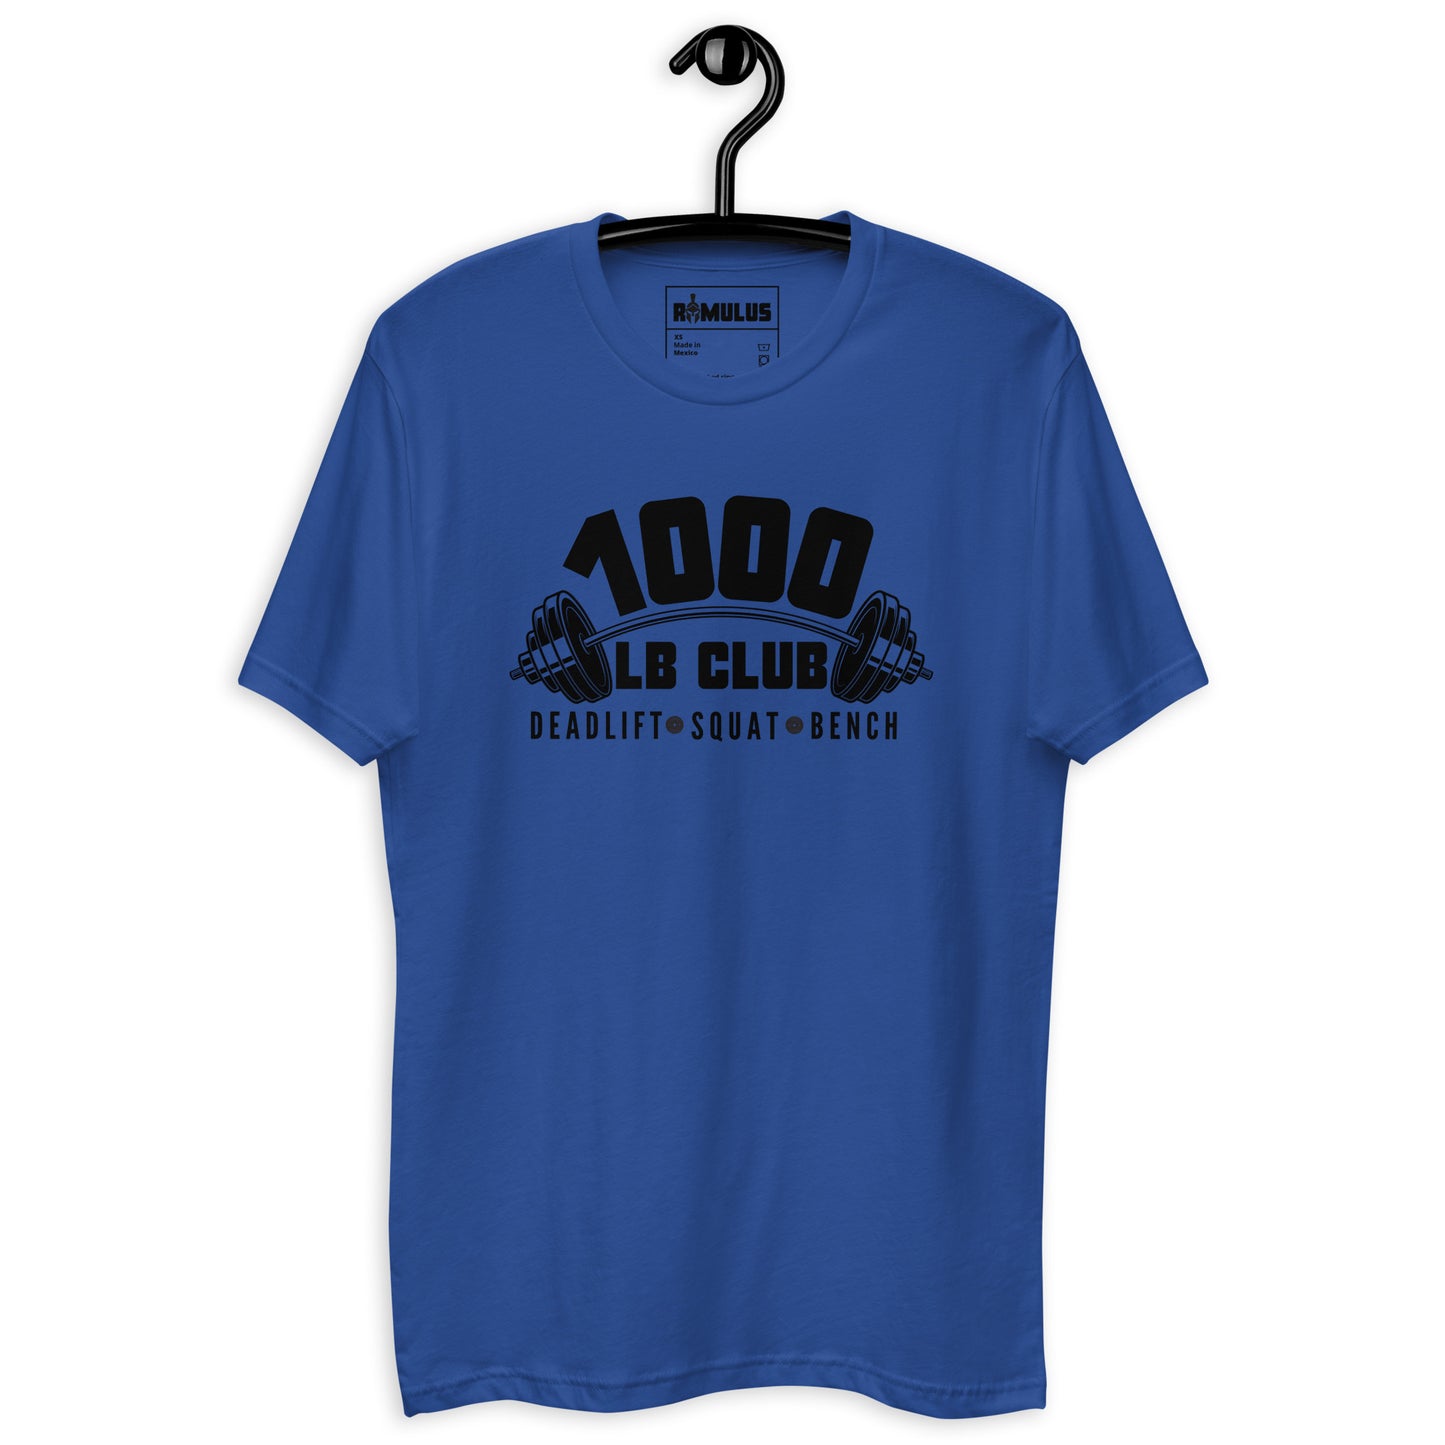 Romulus 1000lb Club Fitted T-shirt Romulus